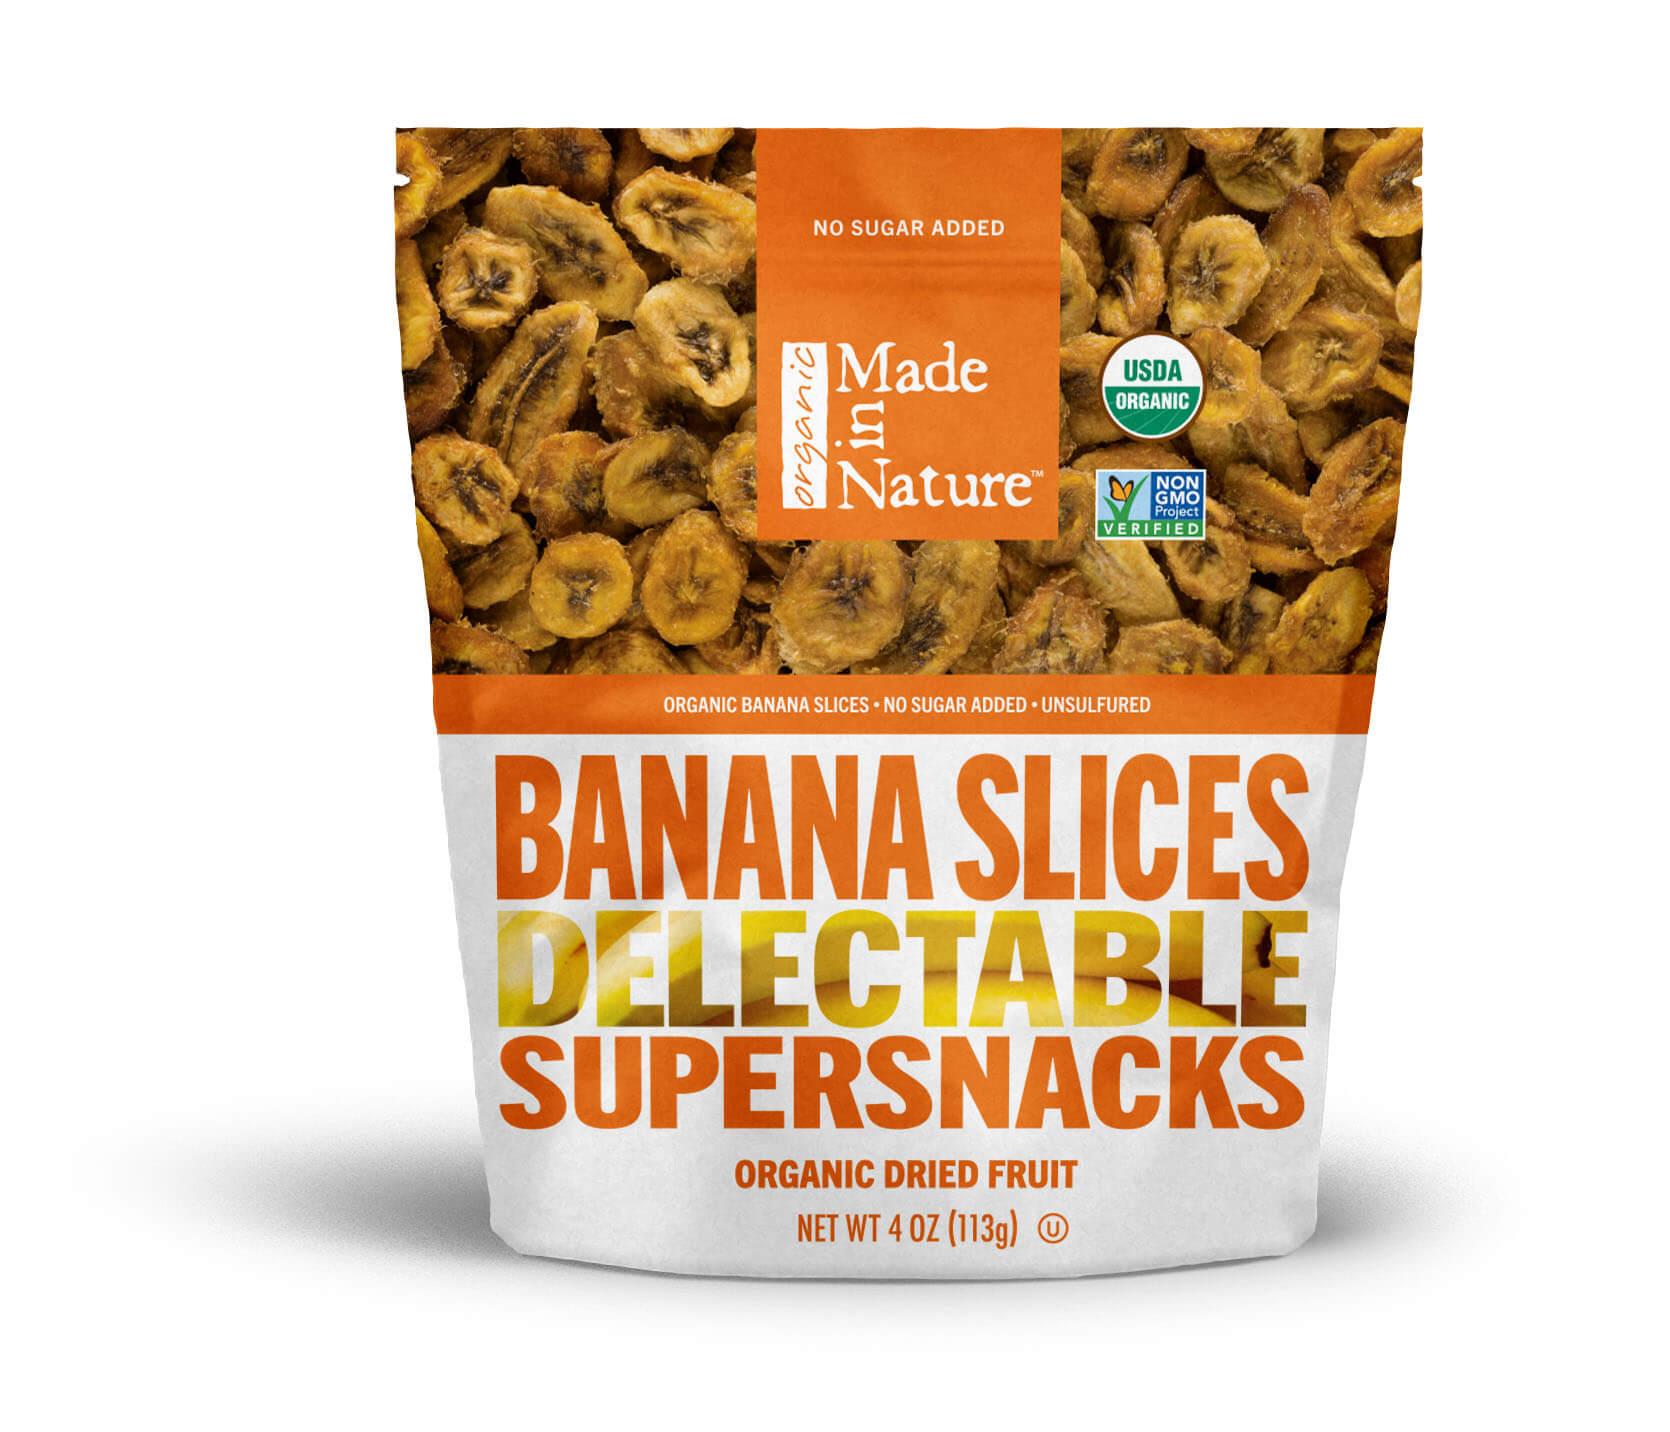 Made in Nature Organic Banana Slices 6 AIP Travel Snacks sarahkayhoffman.com